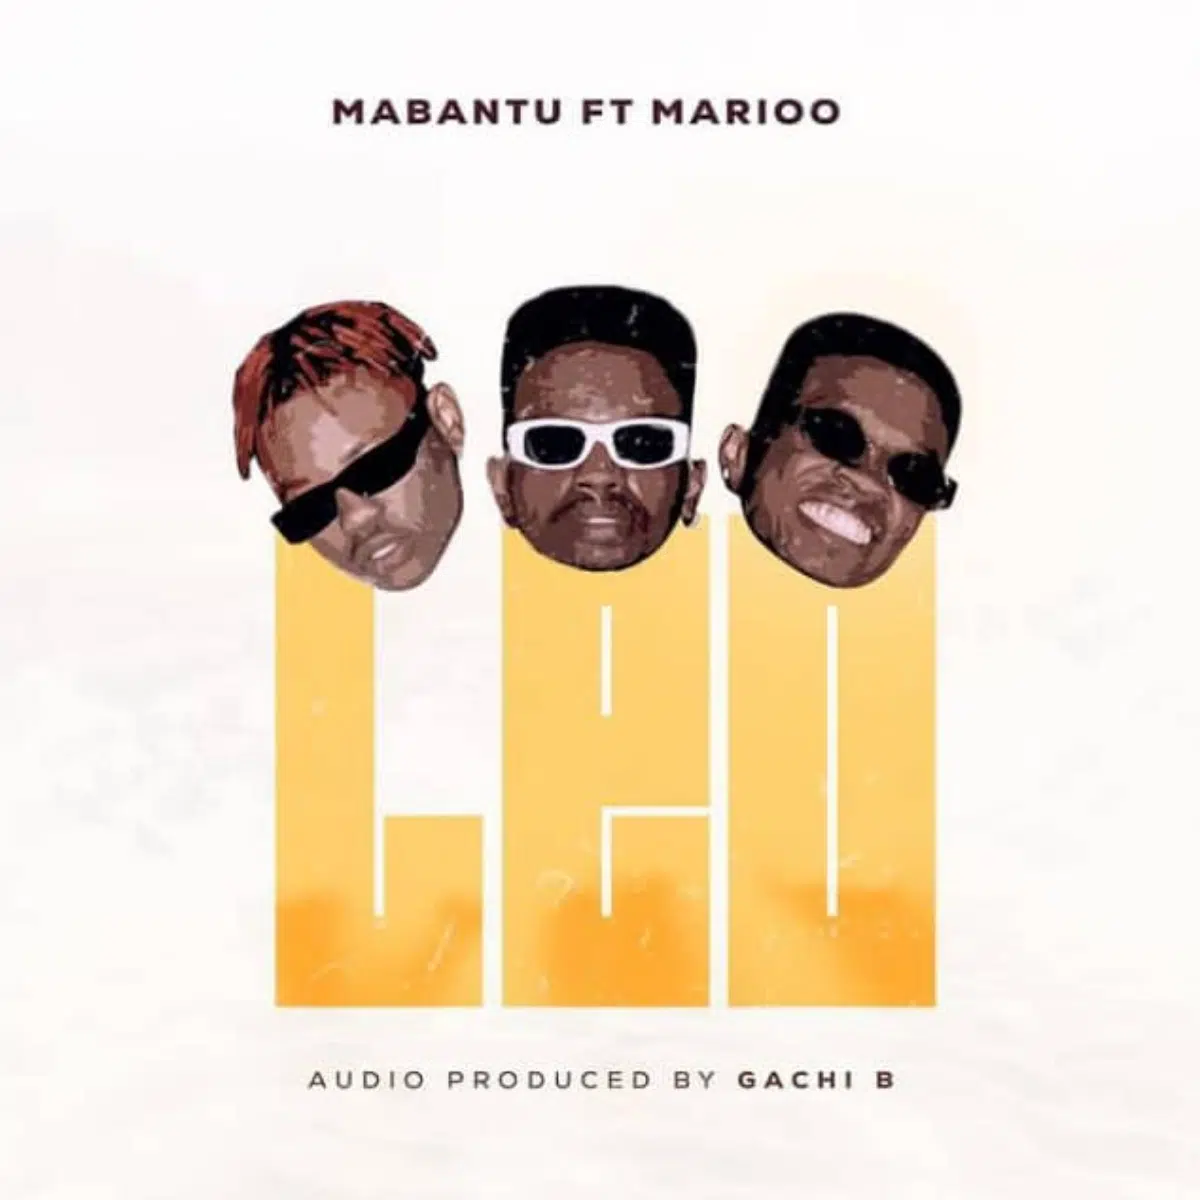 DOWNLOAD: Mabantu Ft Marioo – “Leo” Mp3